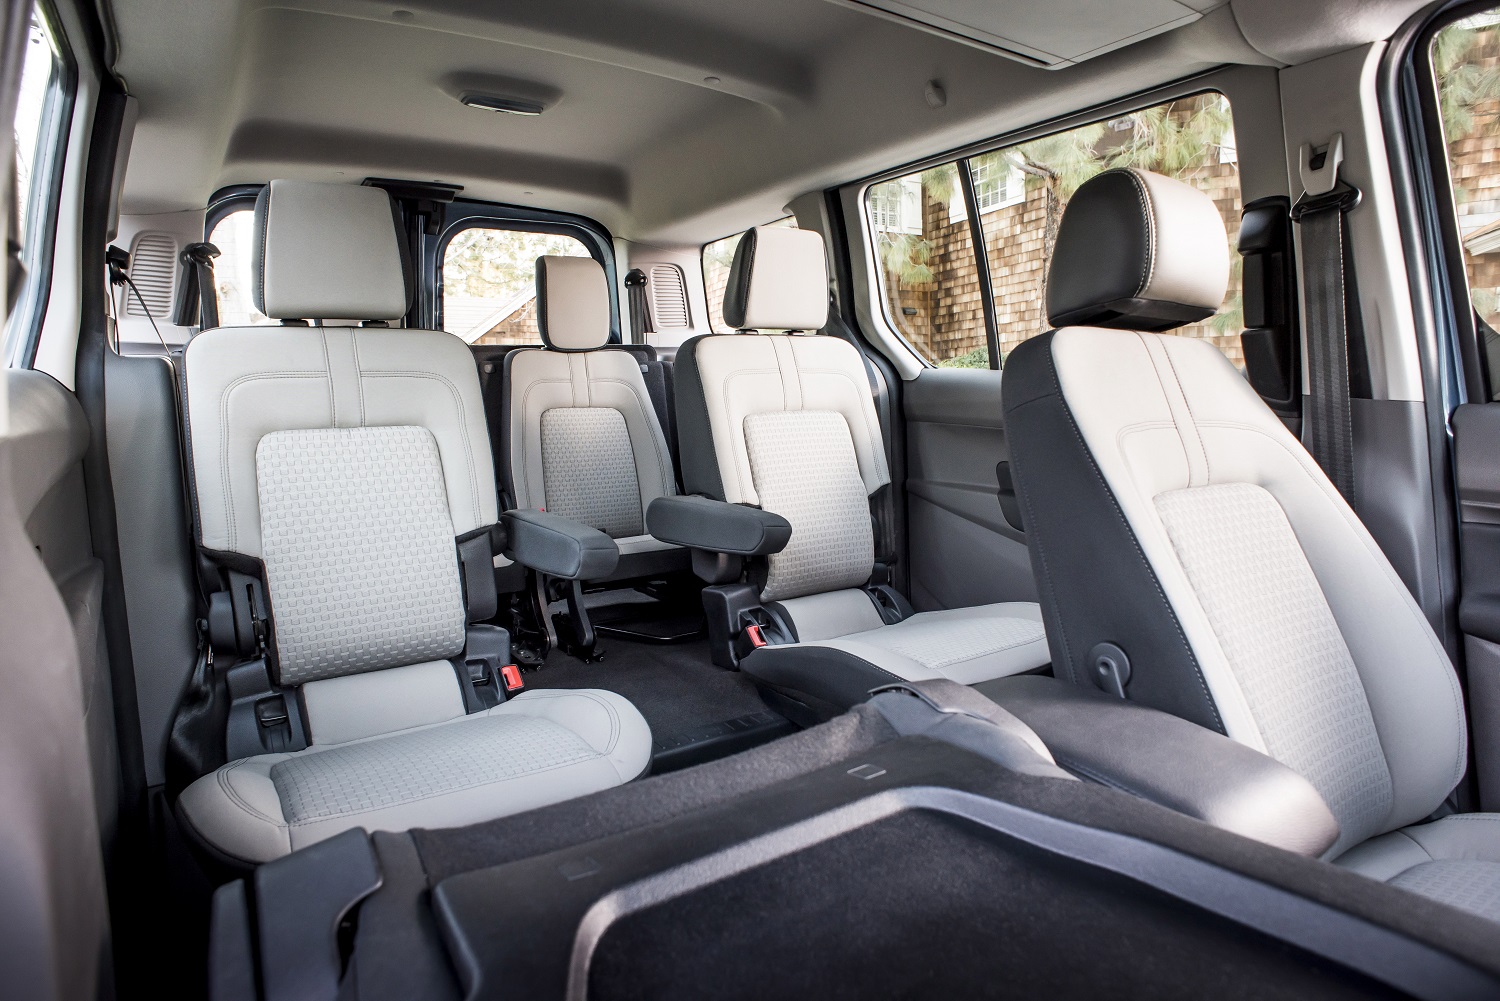 Transit Connect Wagon Ford S Answer To Minivan Malaise Wardsauto